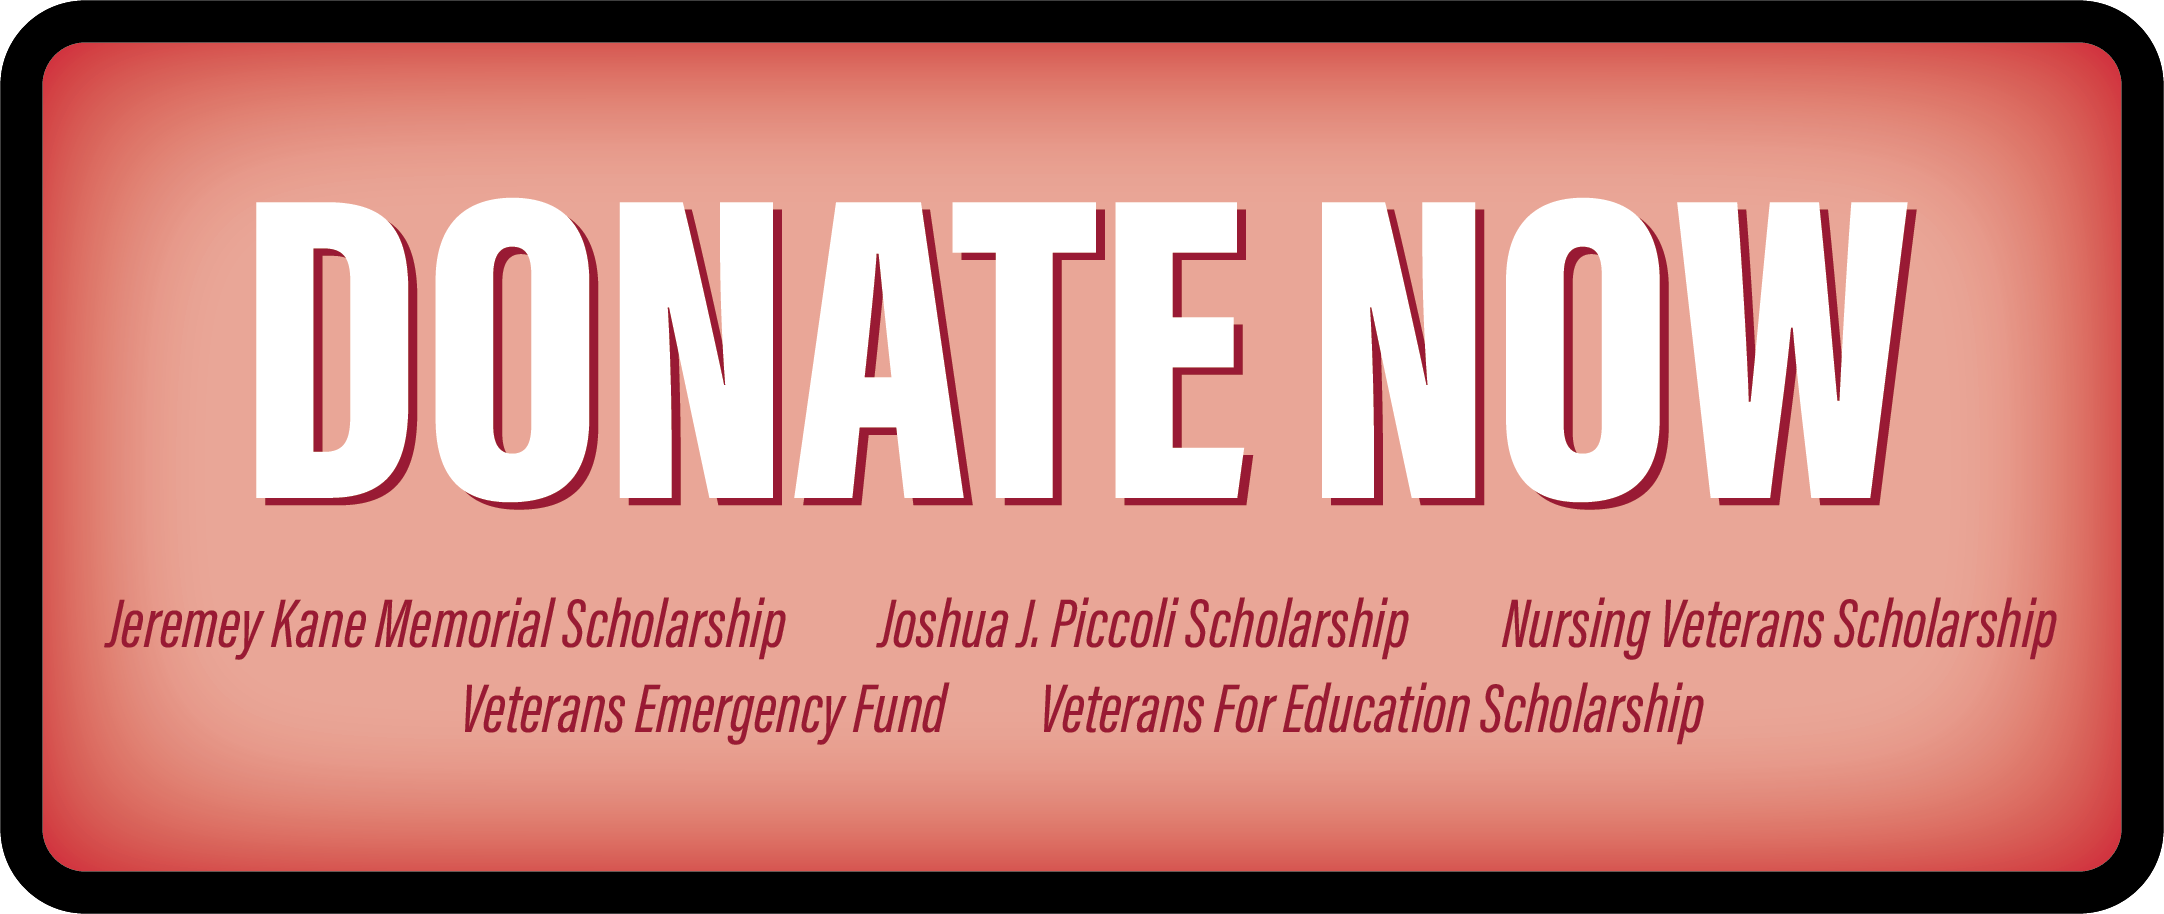 Donate Now to Veteran's Scholarships